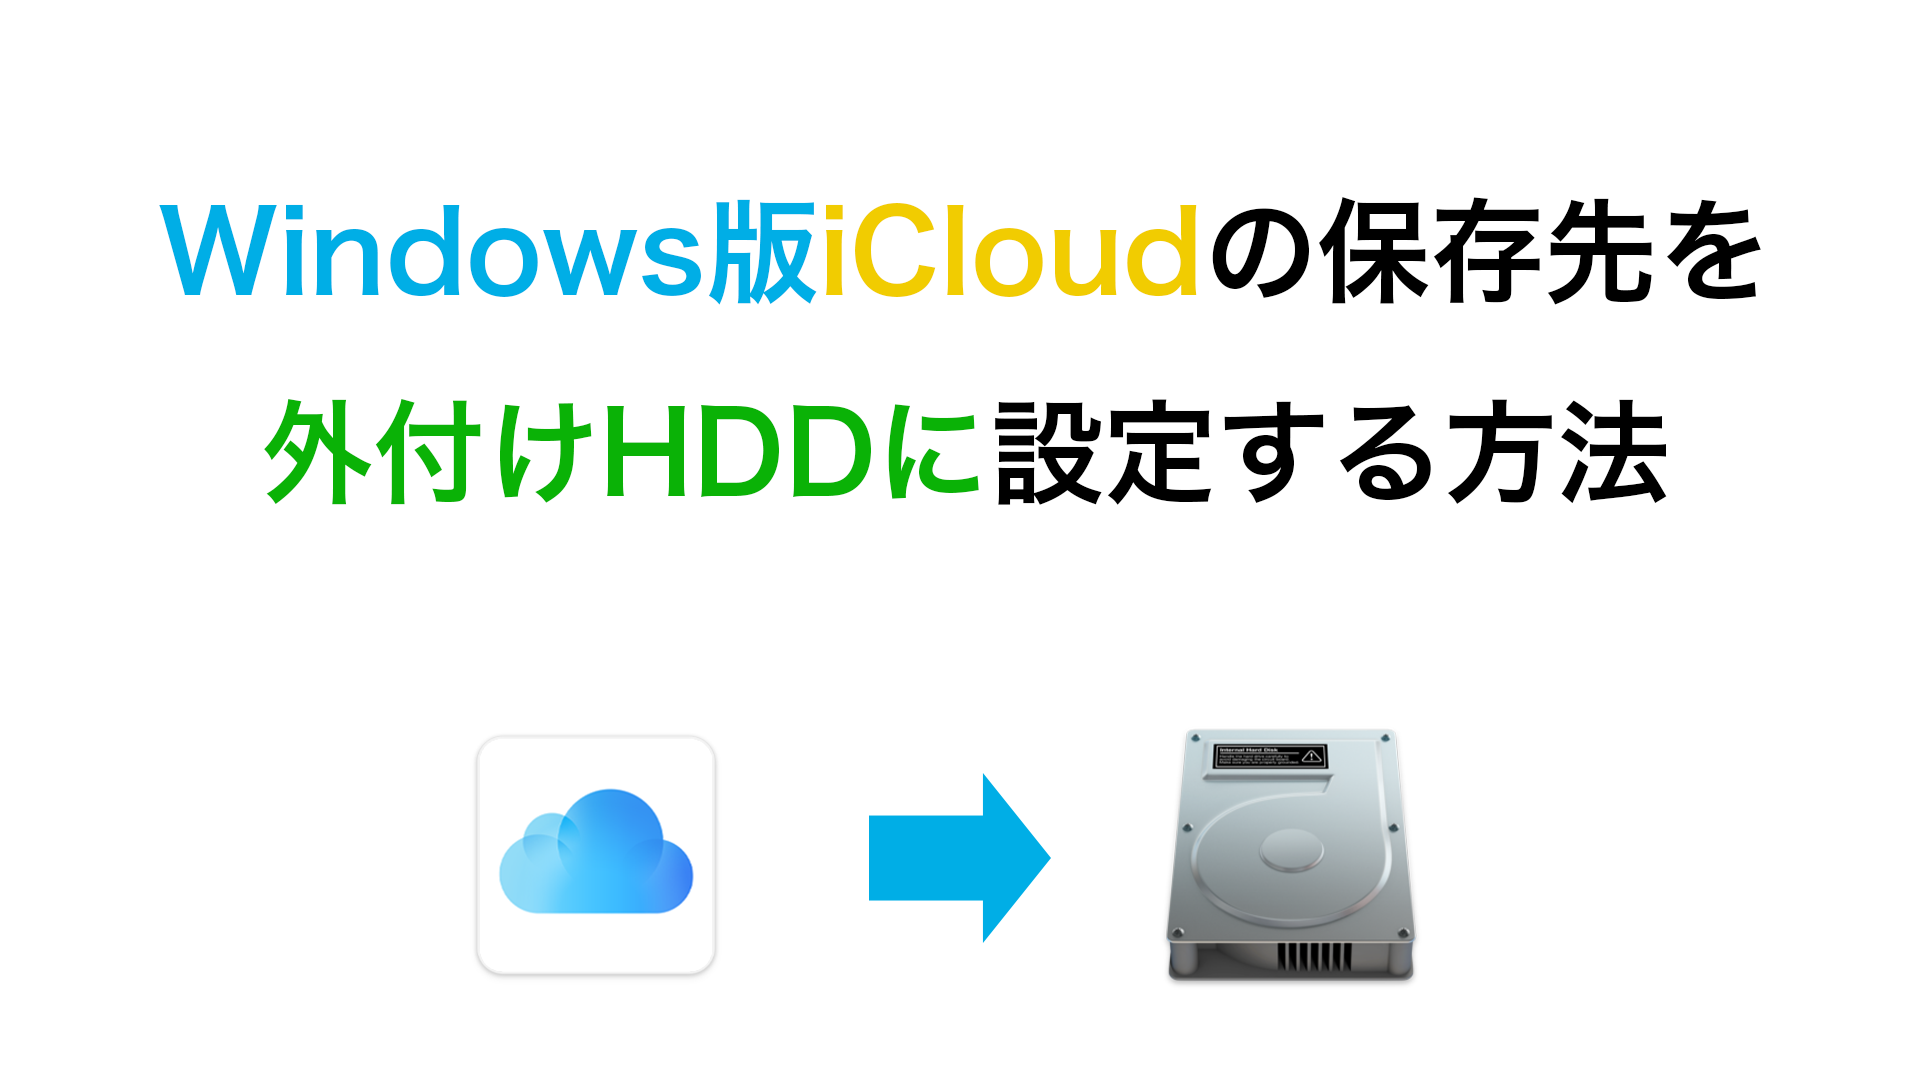 icloudwin - Windows版iCloudの保存先を外付けHDDに設定する方法